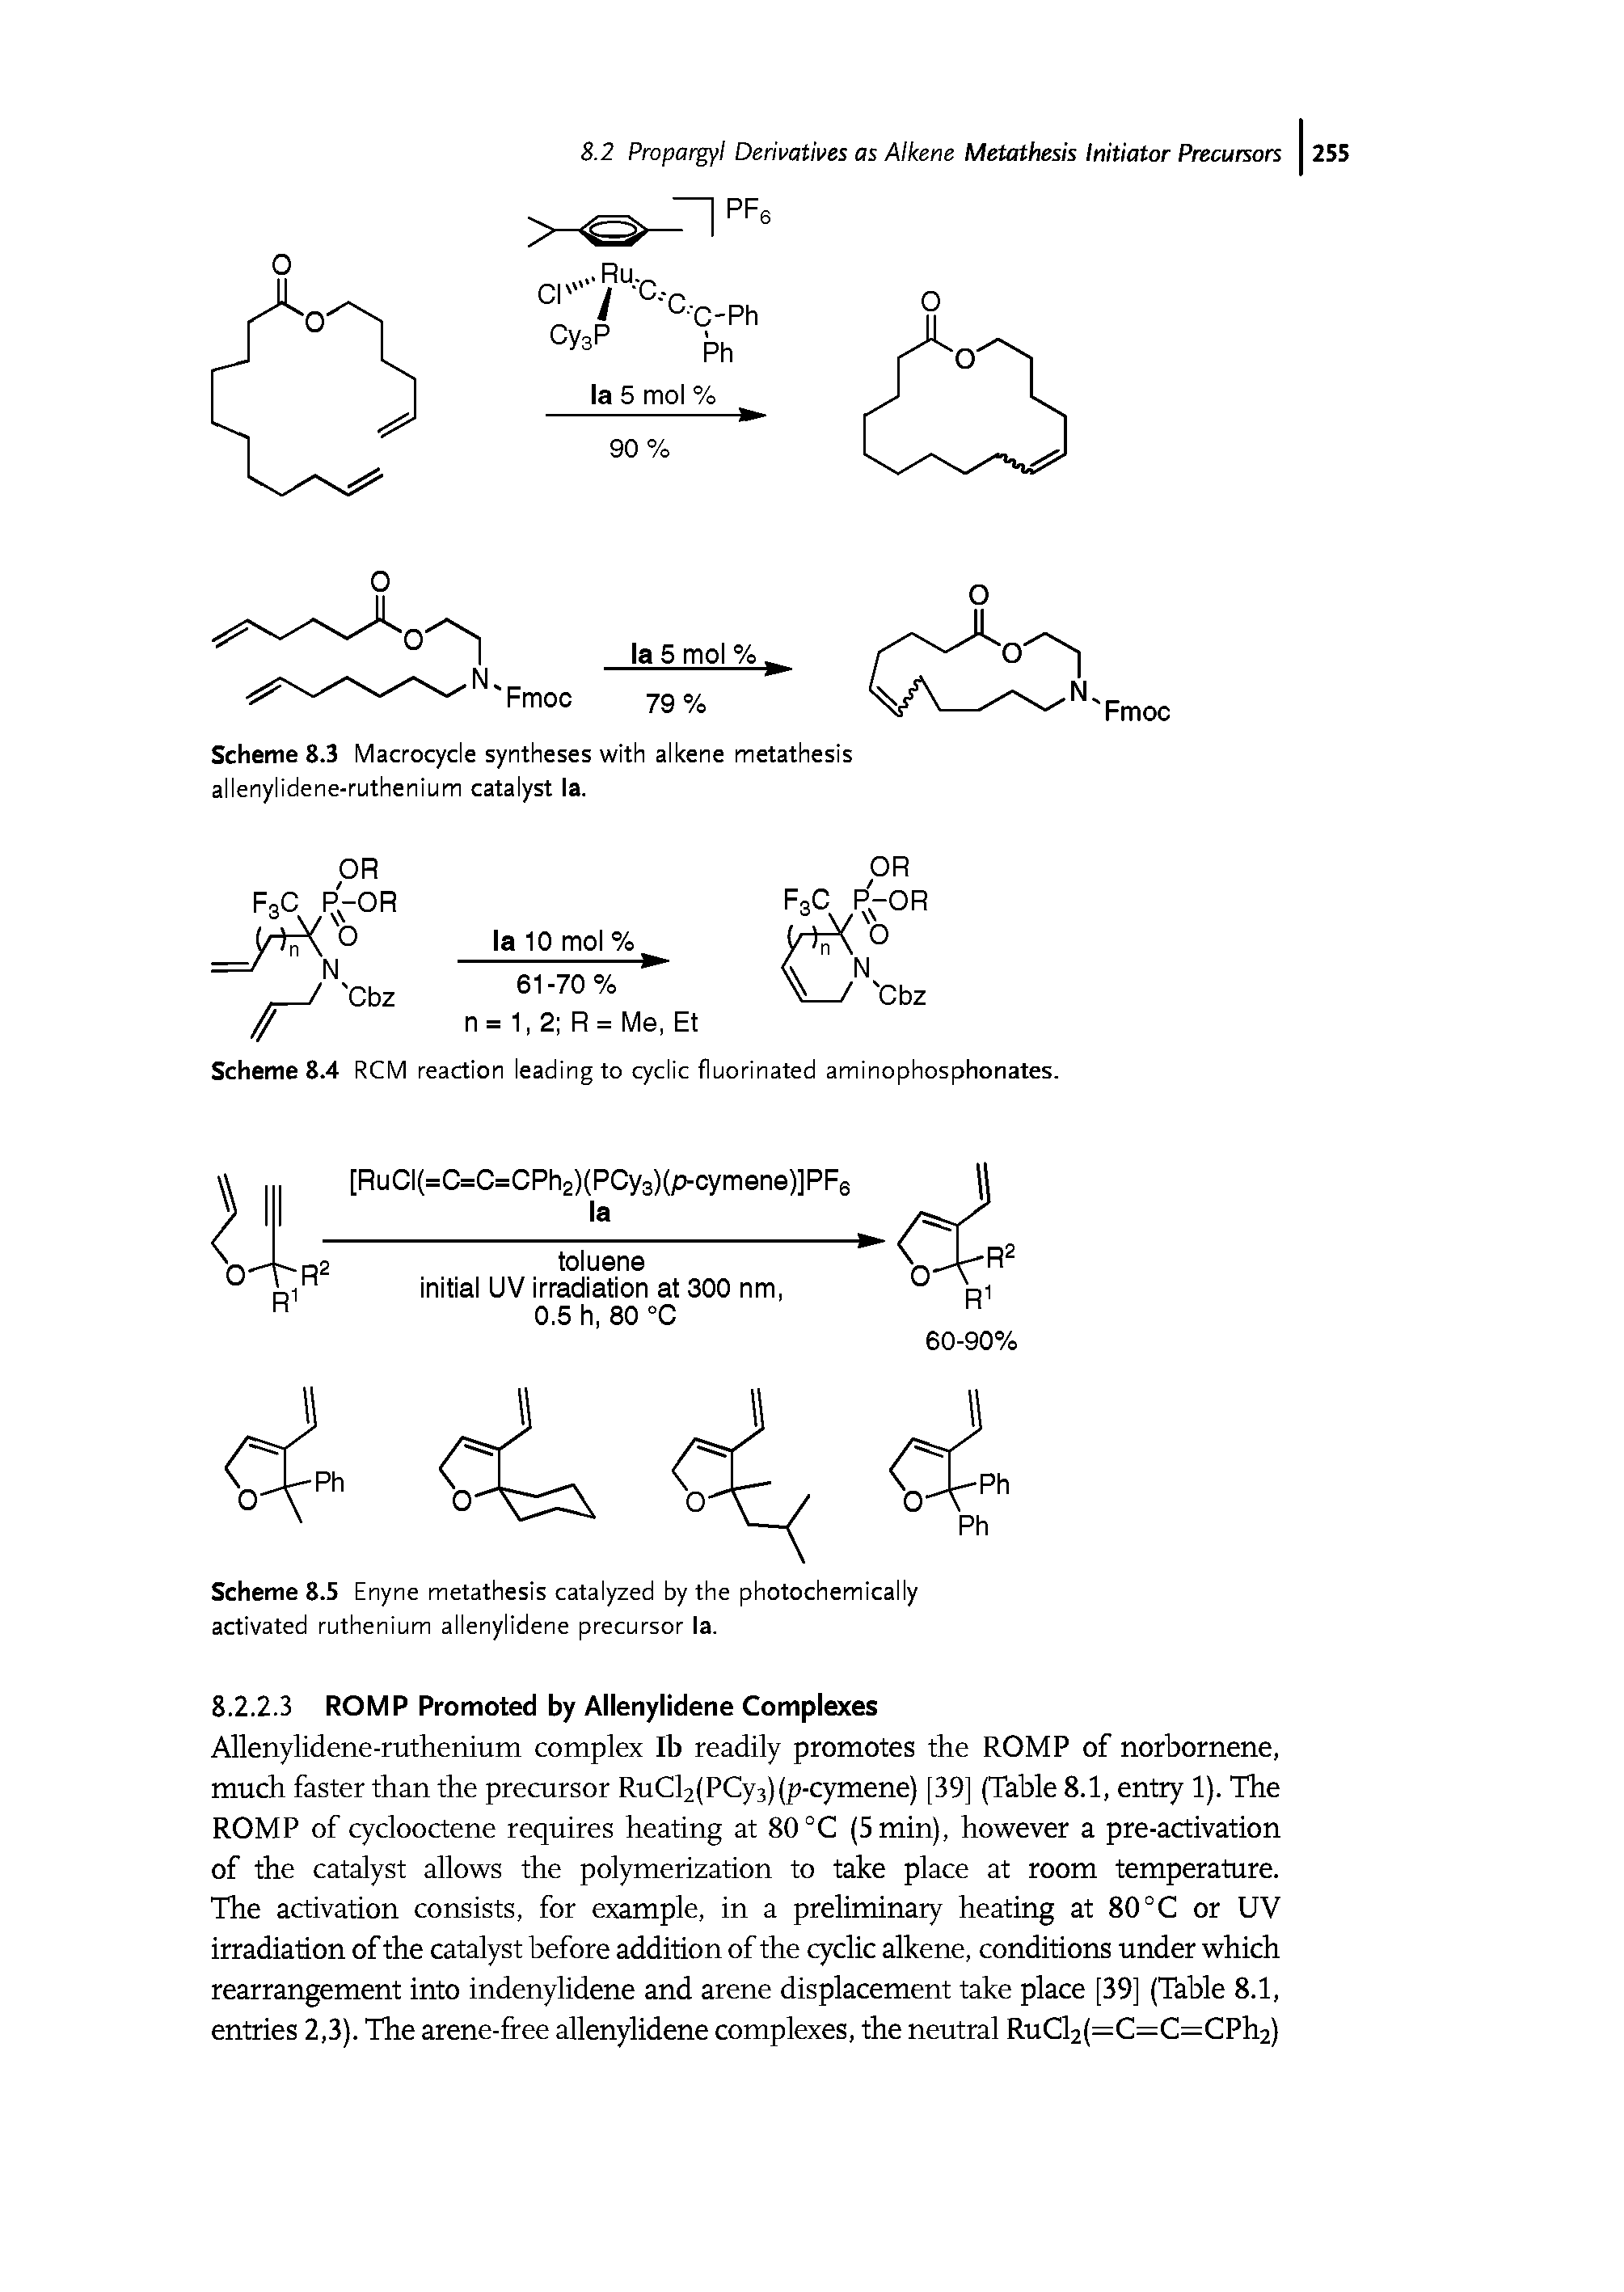 Scheme 8.3 Macrocycle syntheses with aikene metathesis allenylidene-ruthenium catalyst la.